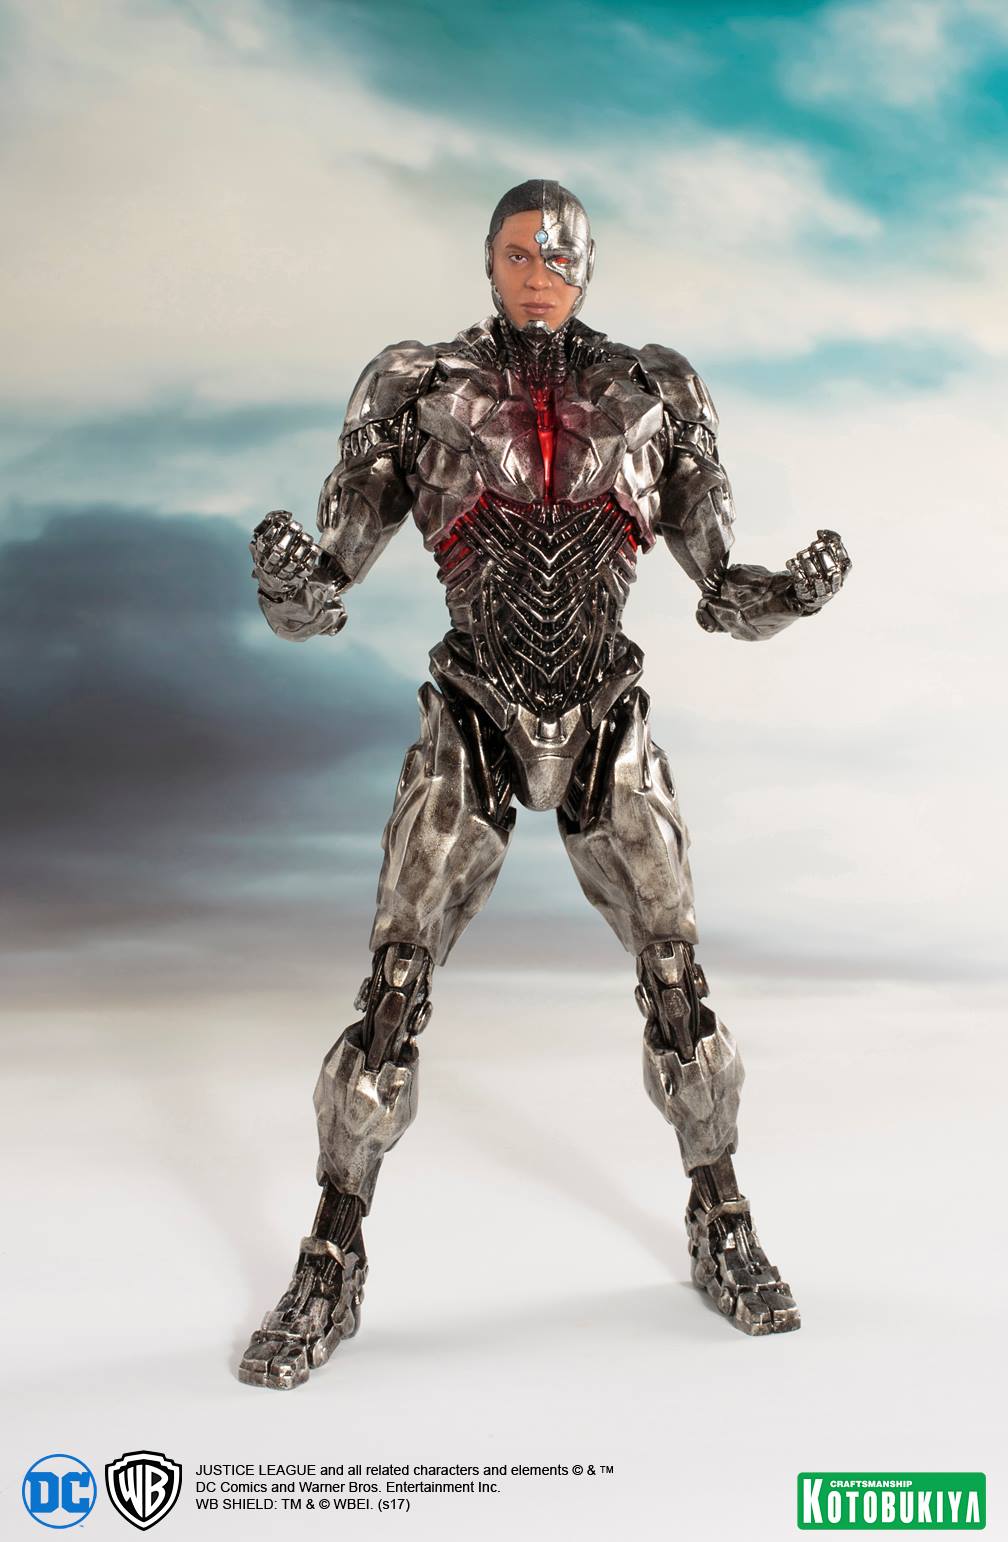 Kotobukiya DC Comics Justice League ARTFX+ Cyborg Statue-2